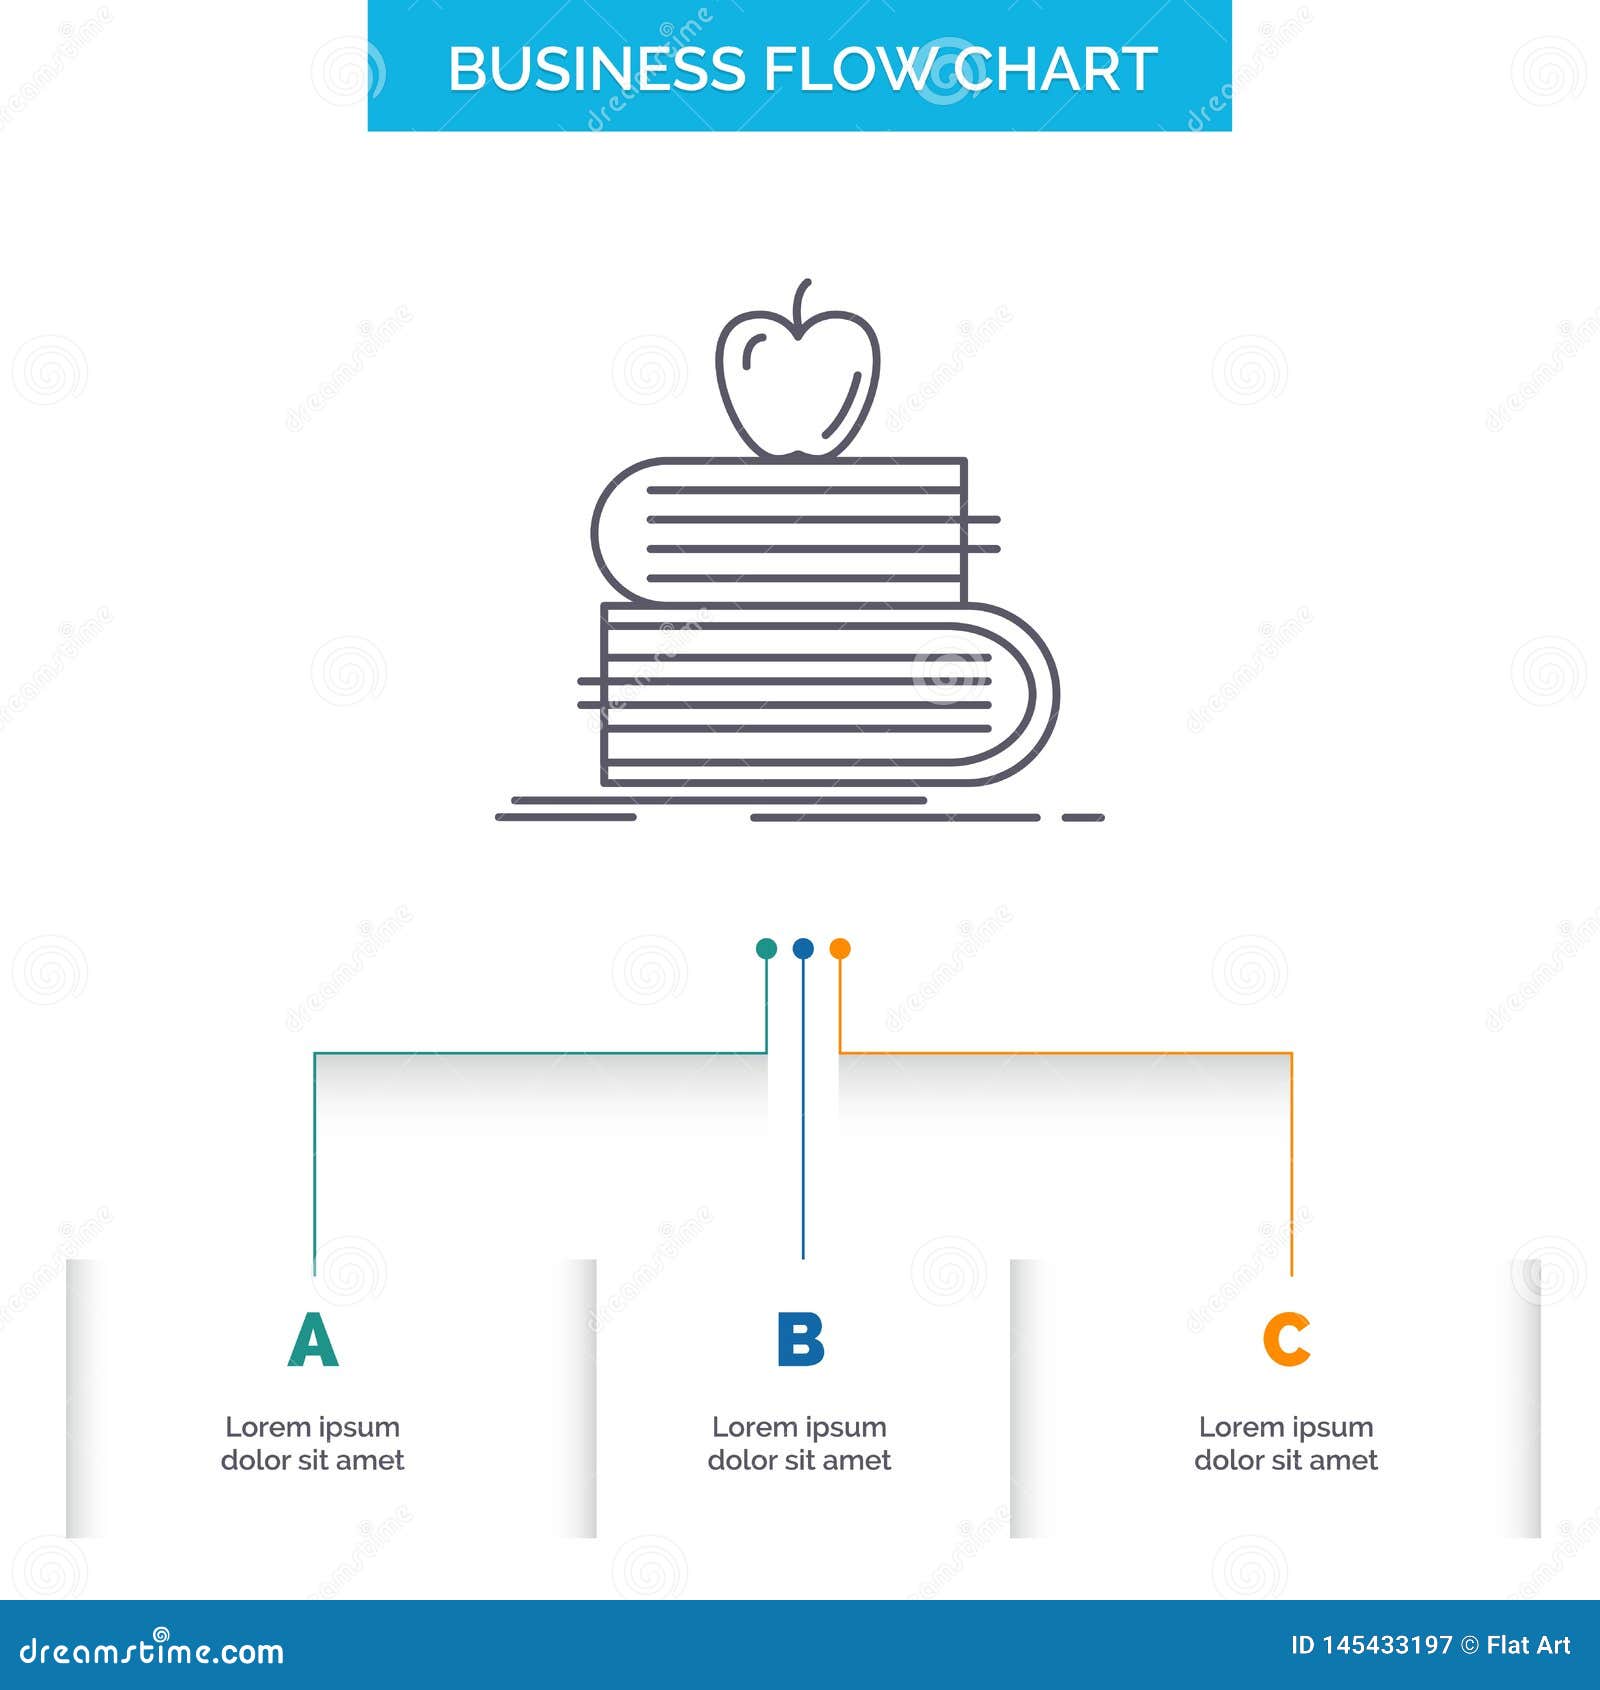 Apple Flow Chart